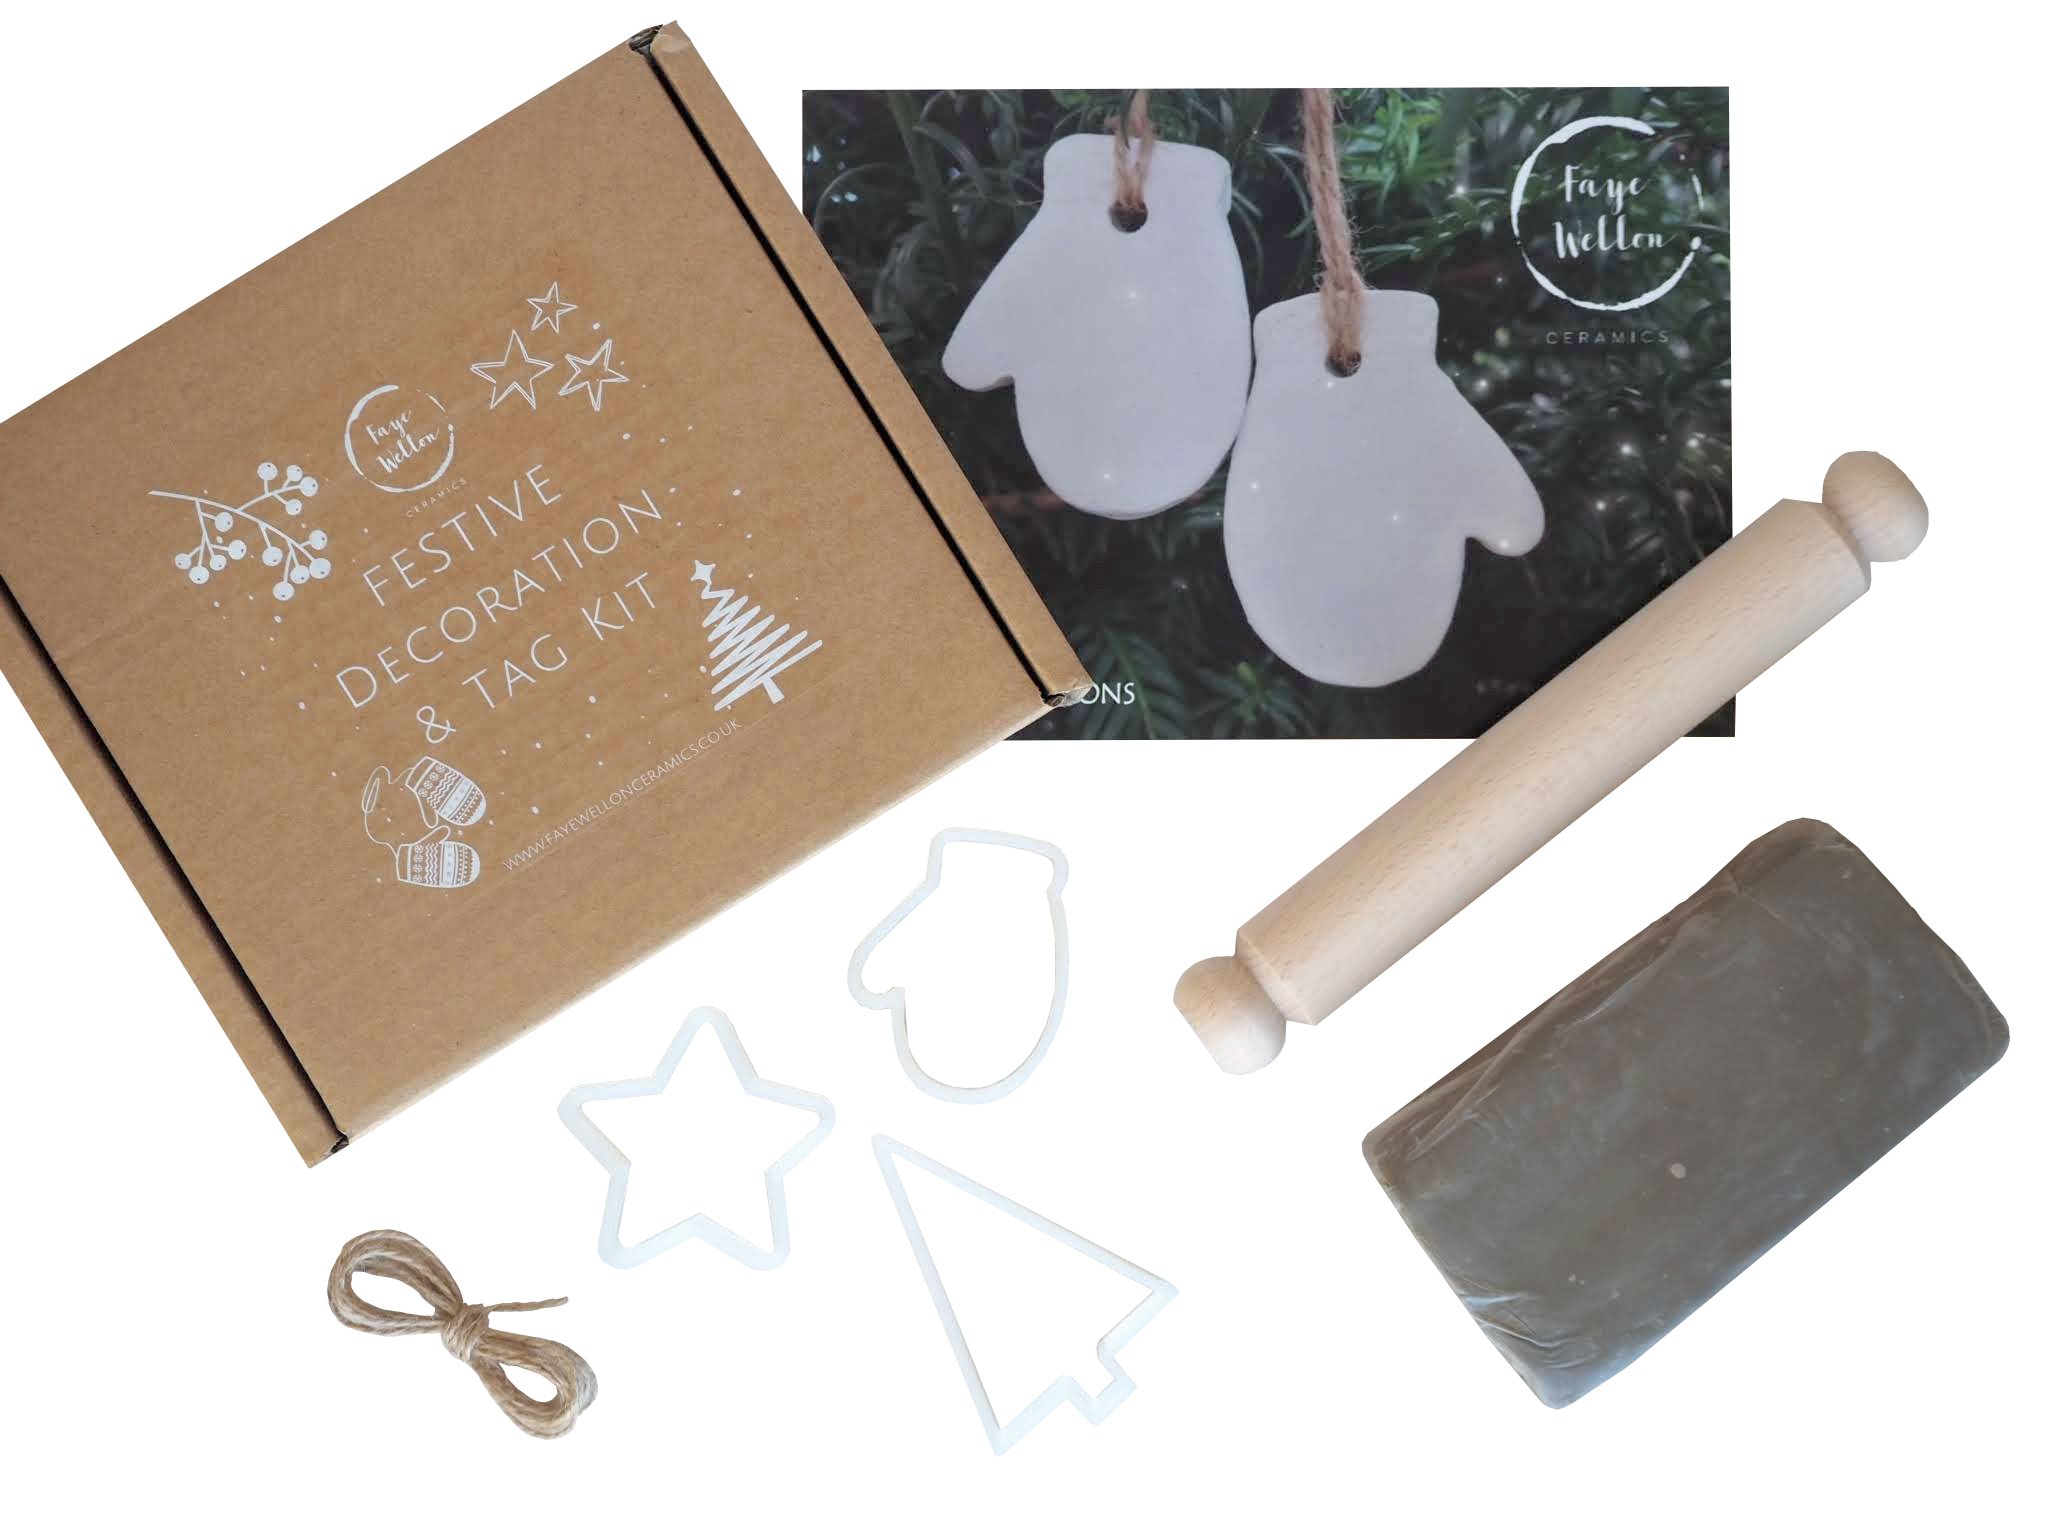 Numérico Hora exhaustivo Christmas decoration & tag making pottery kit — Faye Wellon Ceramics